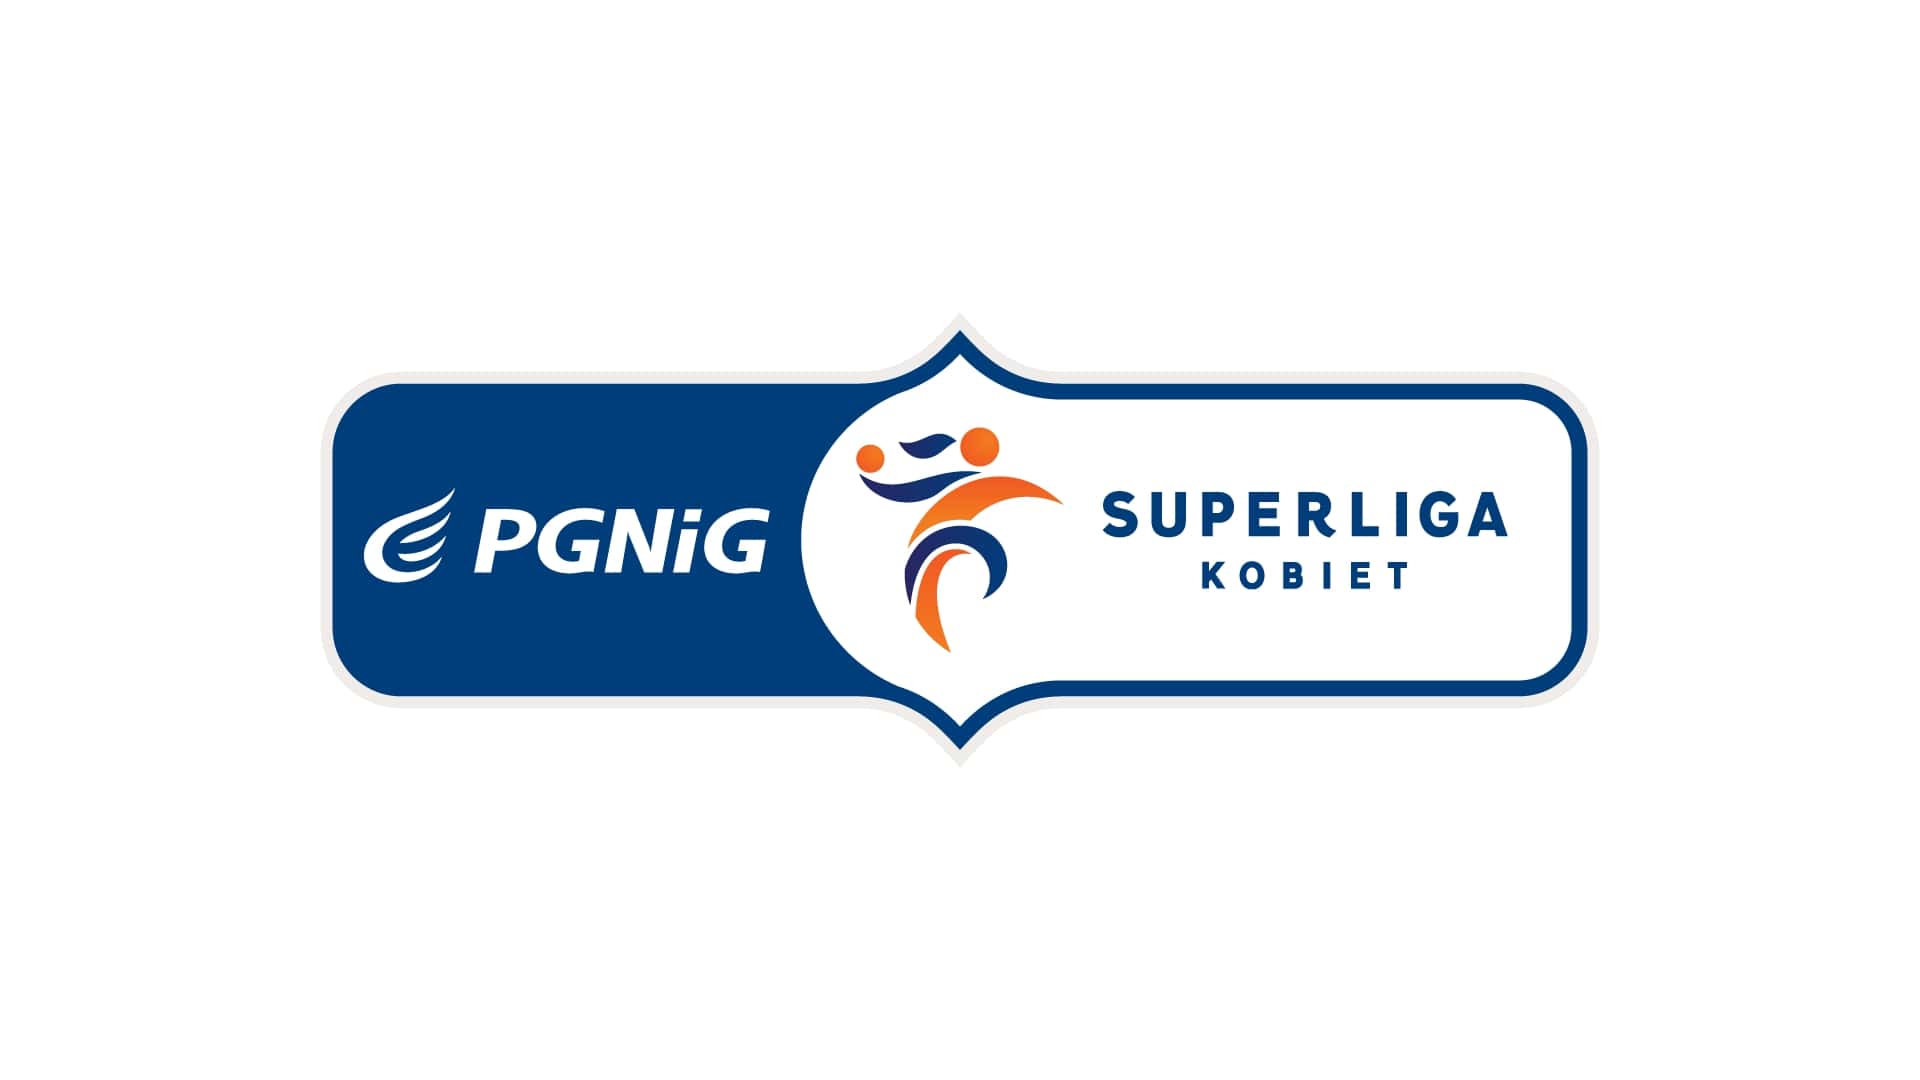 PGNiG Superliga kobiet w kanałach Social Media